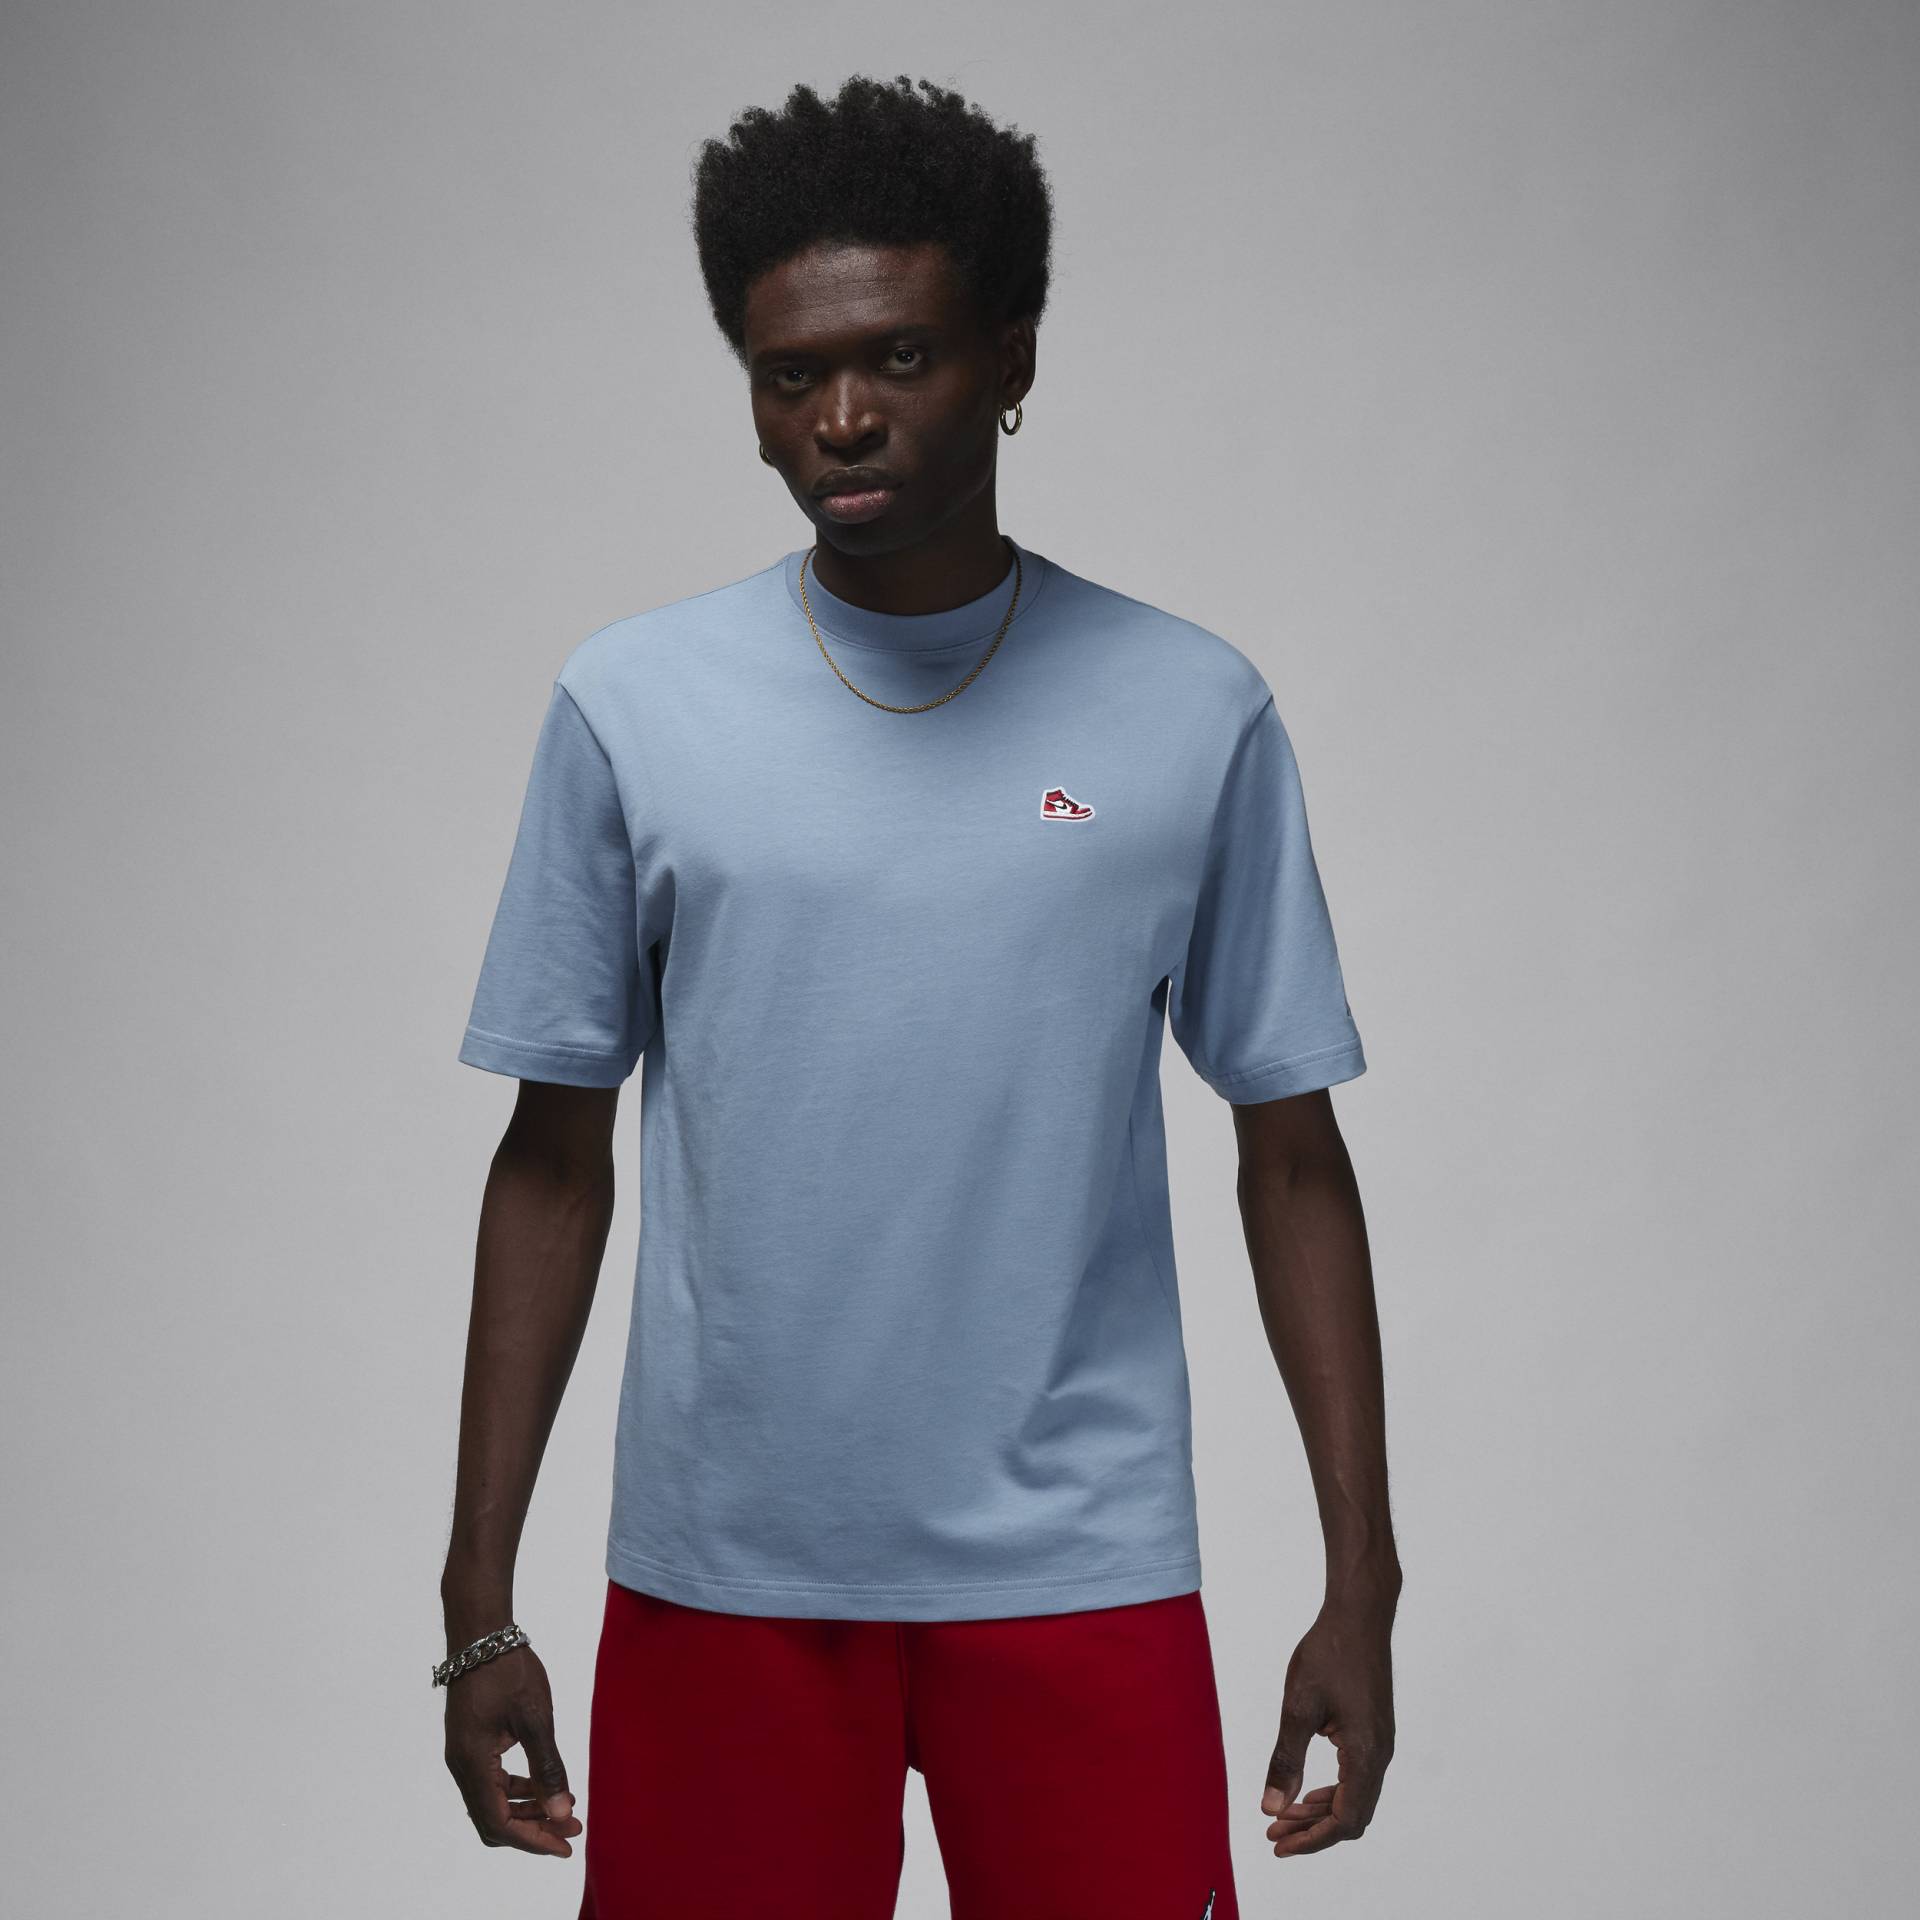 Jordan Brand Herren-T-Shirt - Blau von Jordan